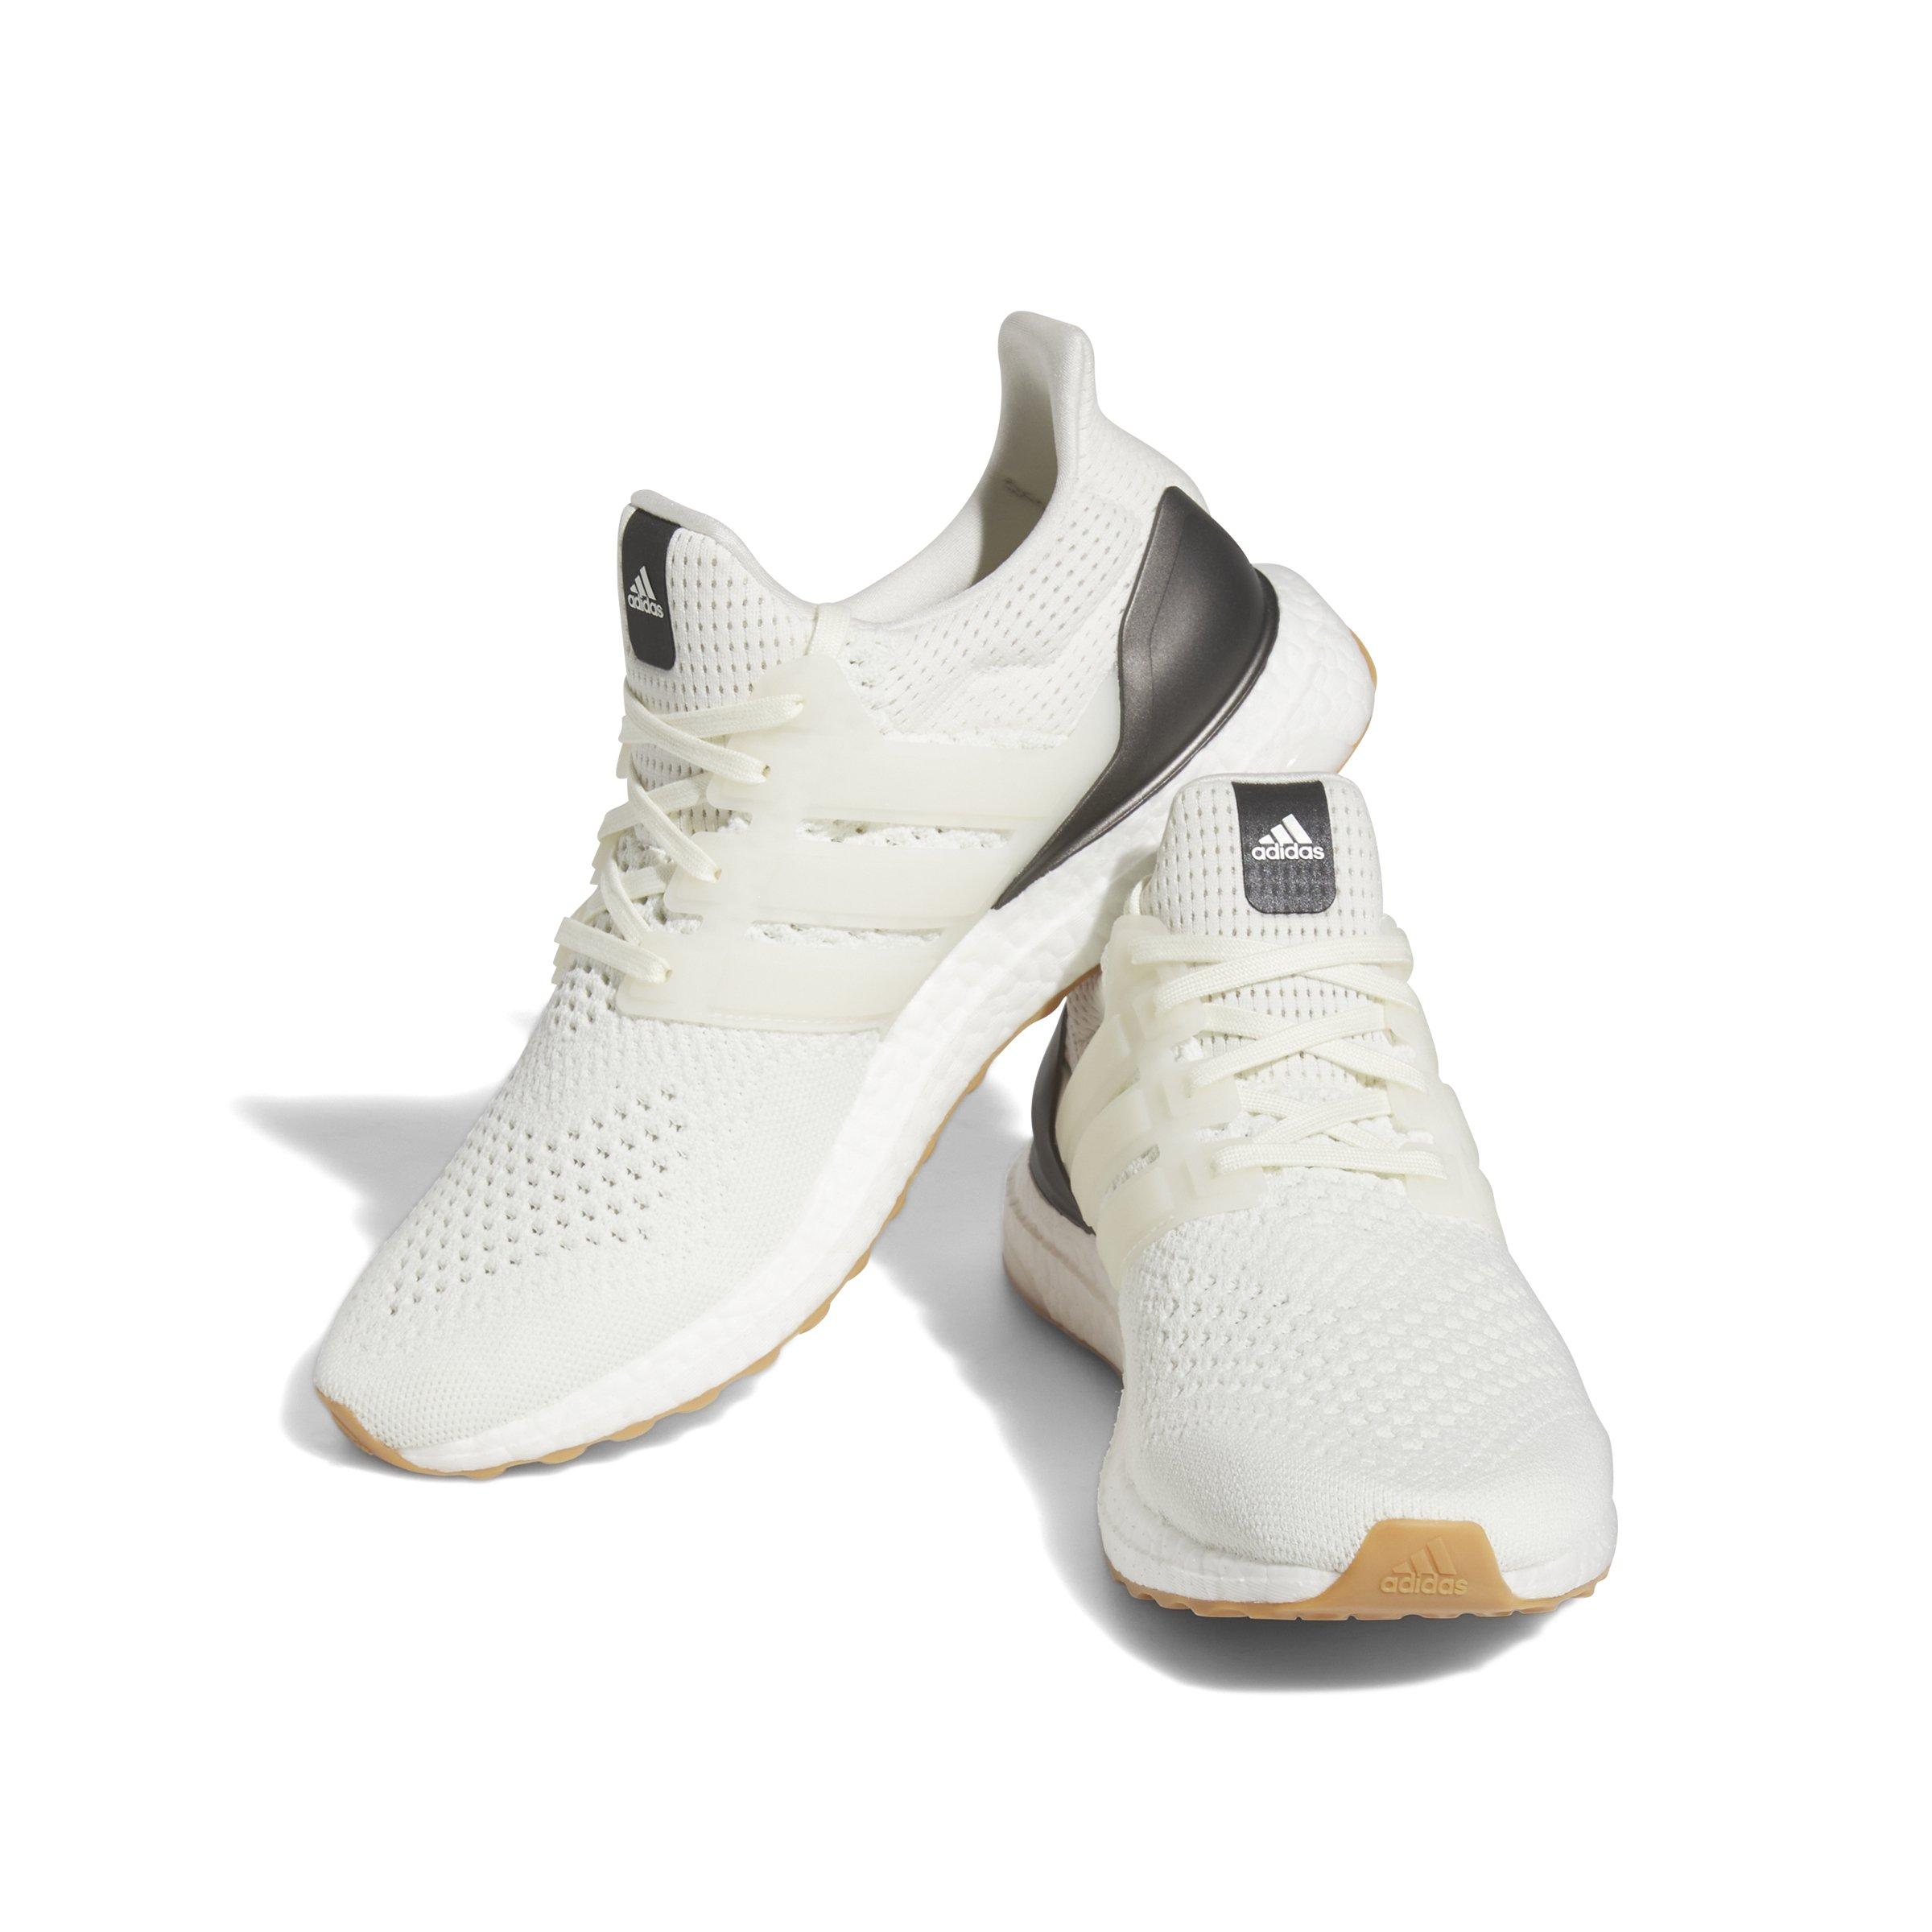 adidas Ultraboost 1.0 FoC "Off White/Core Black" Men's Running Shoe